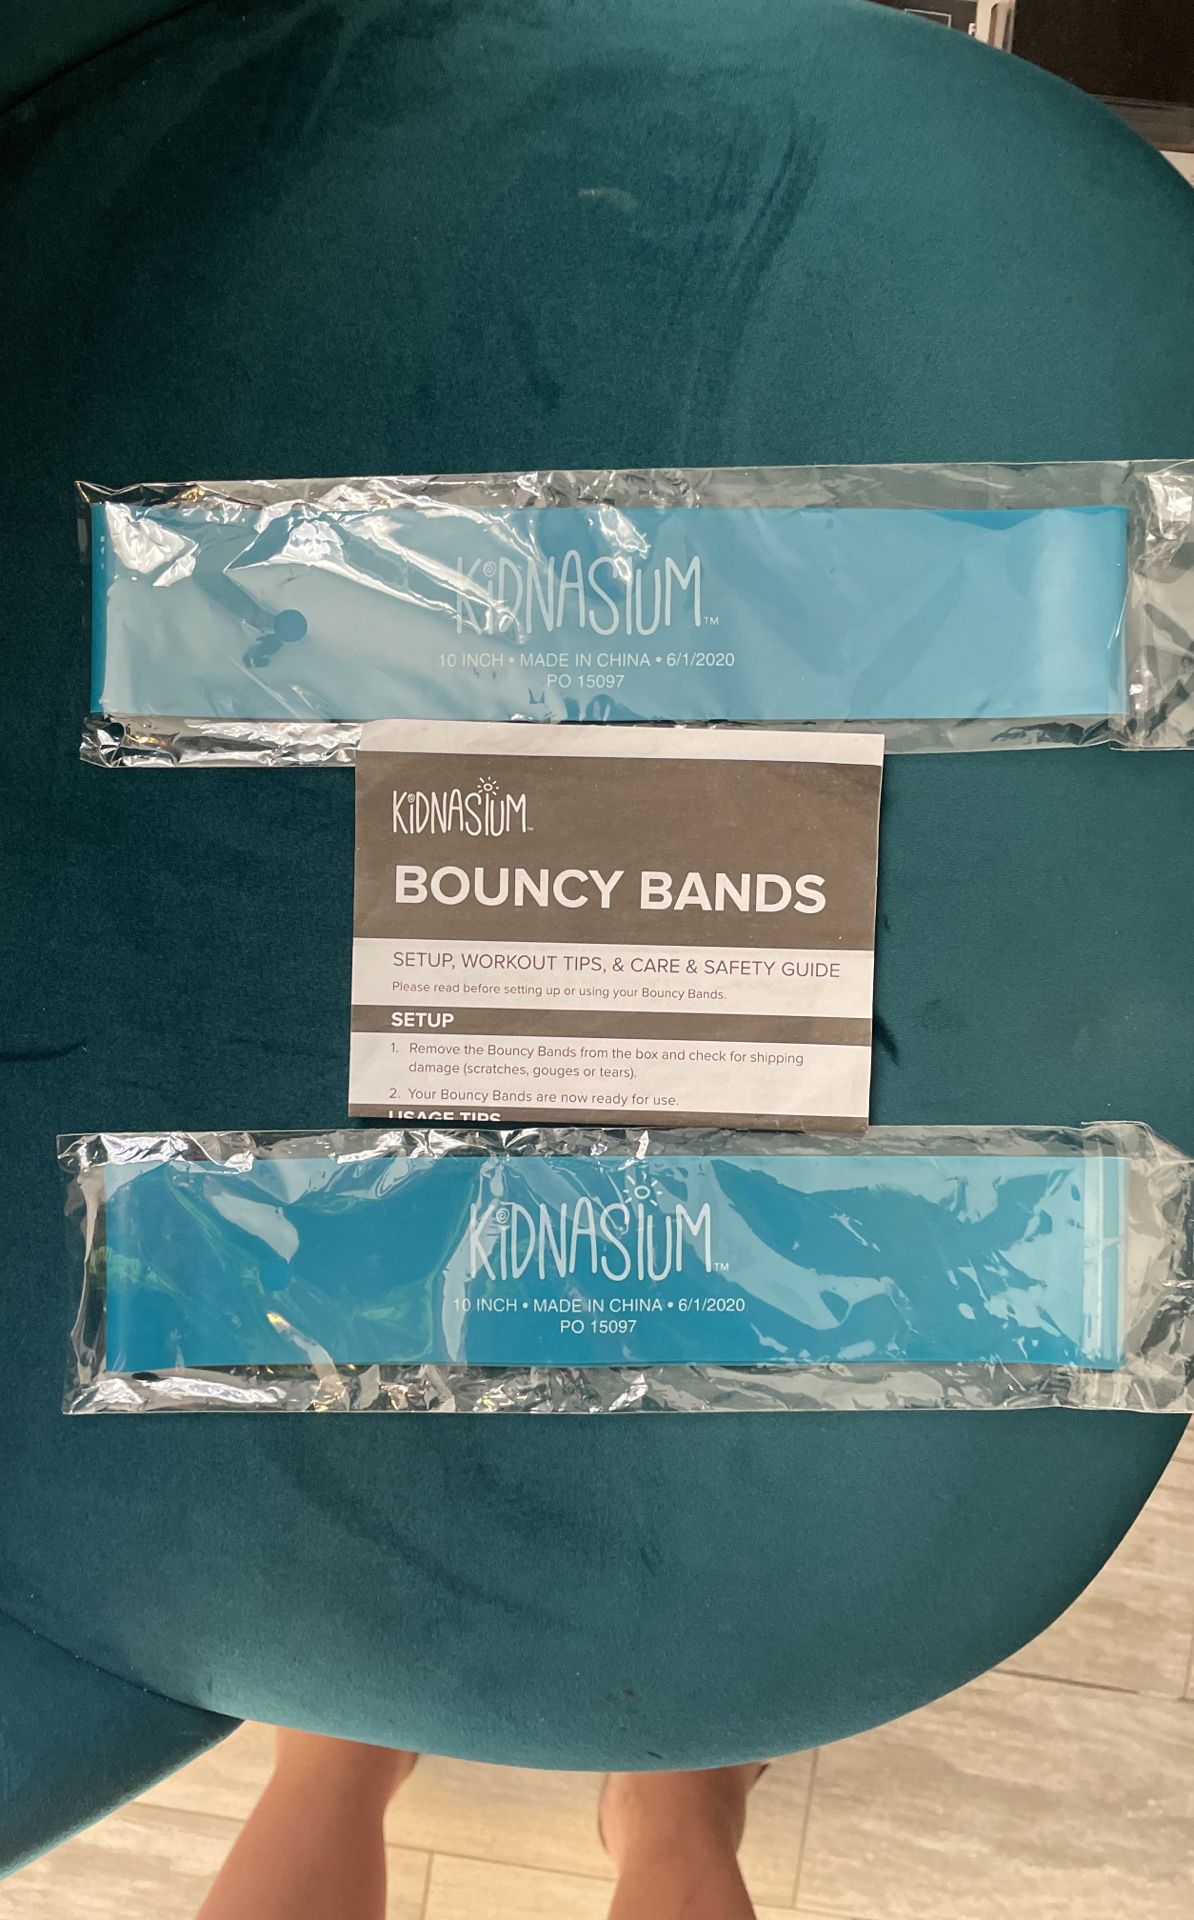 Kidnasium Bouncy Bands